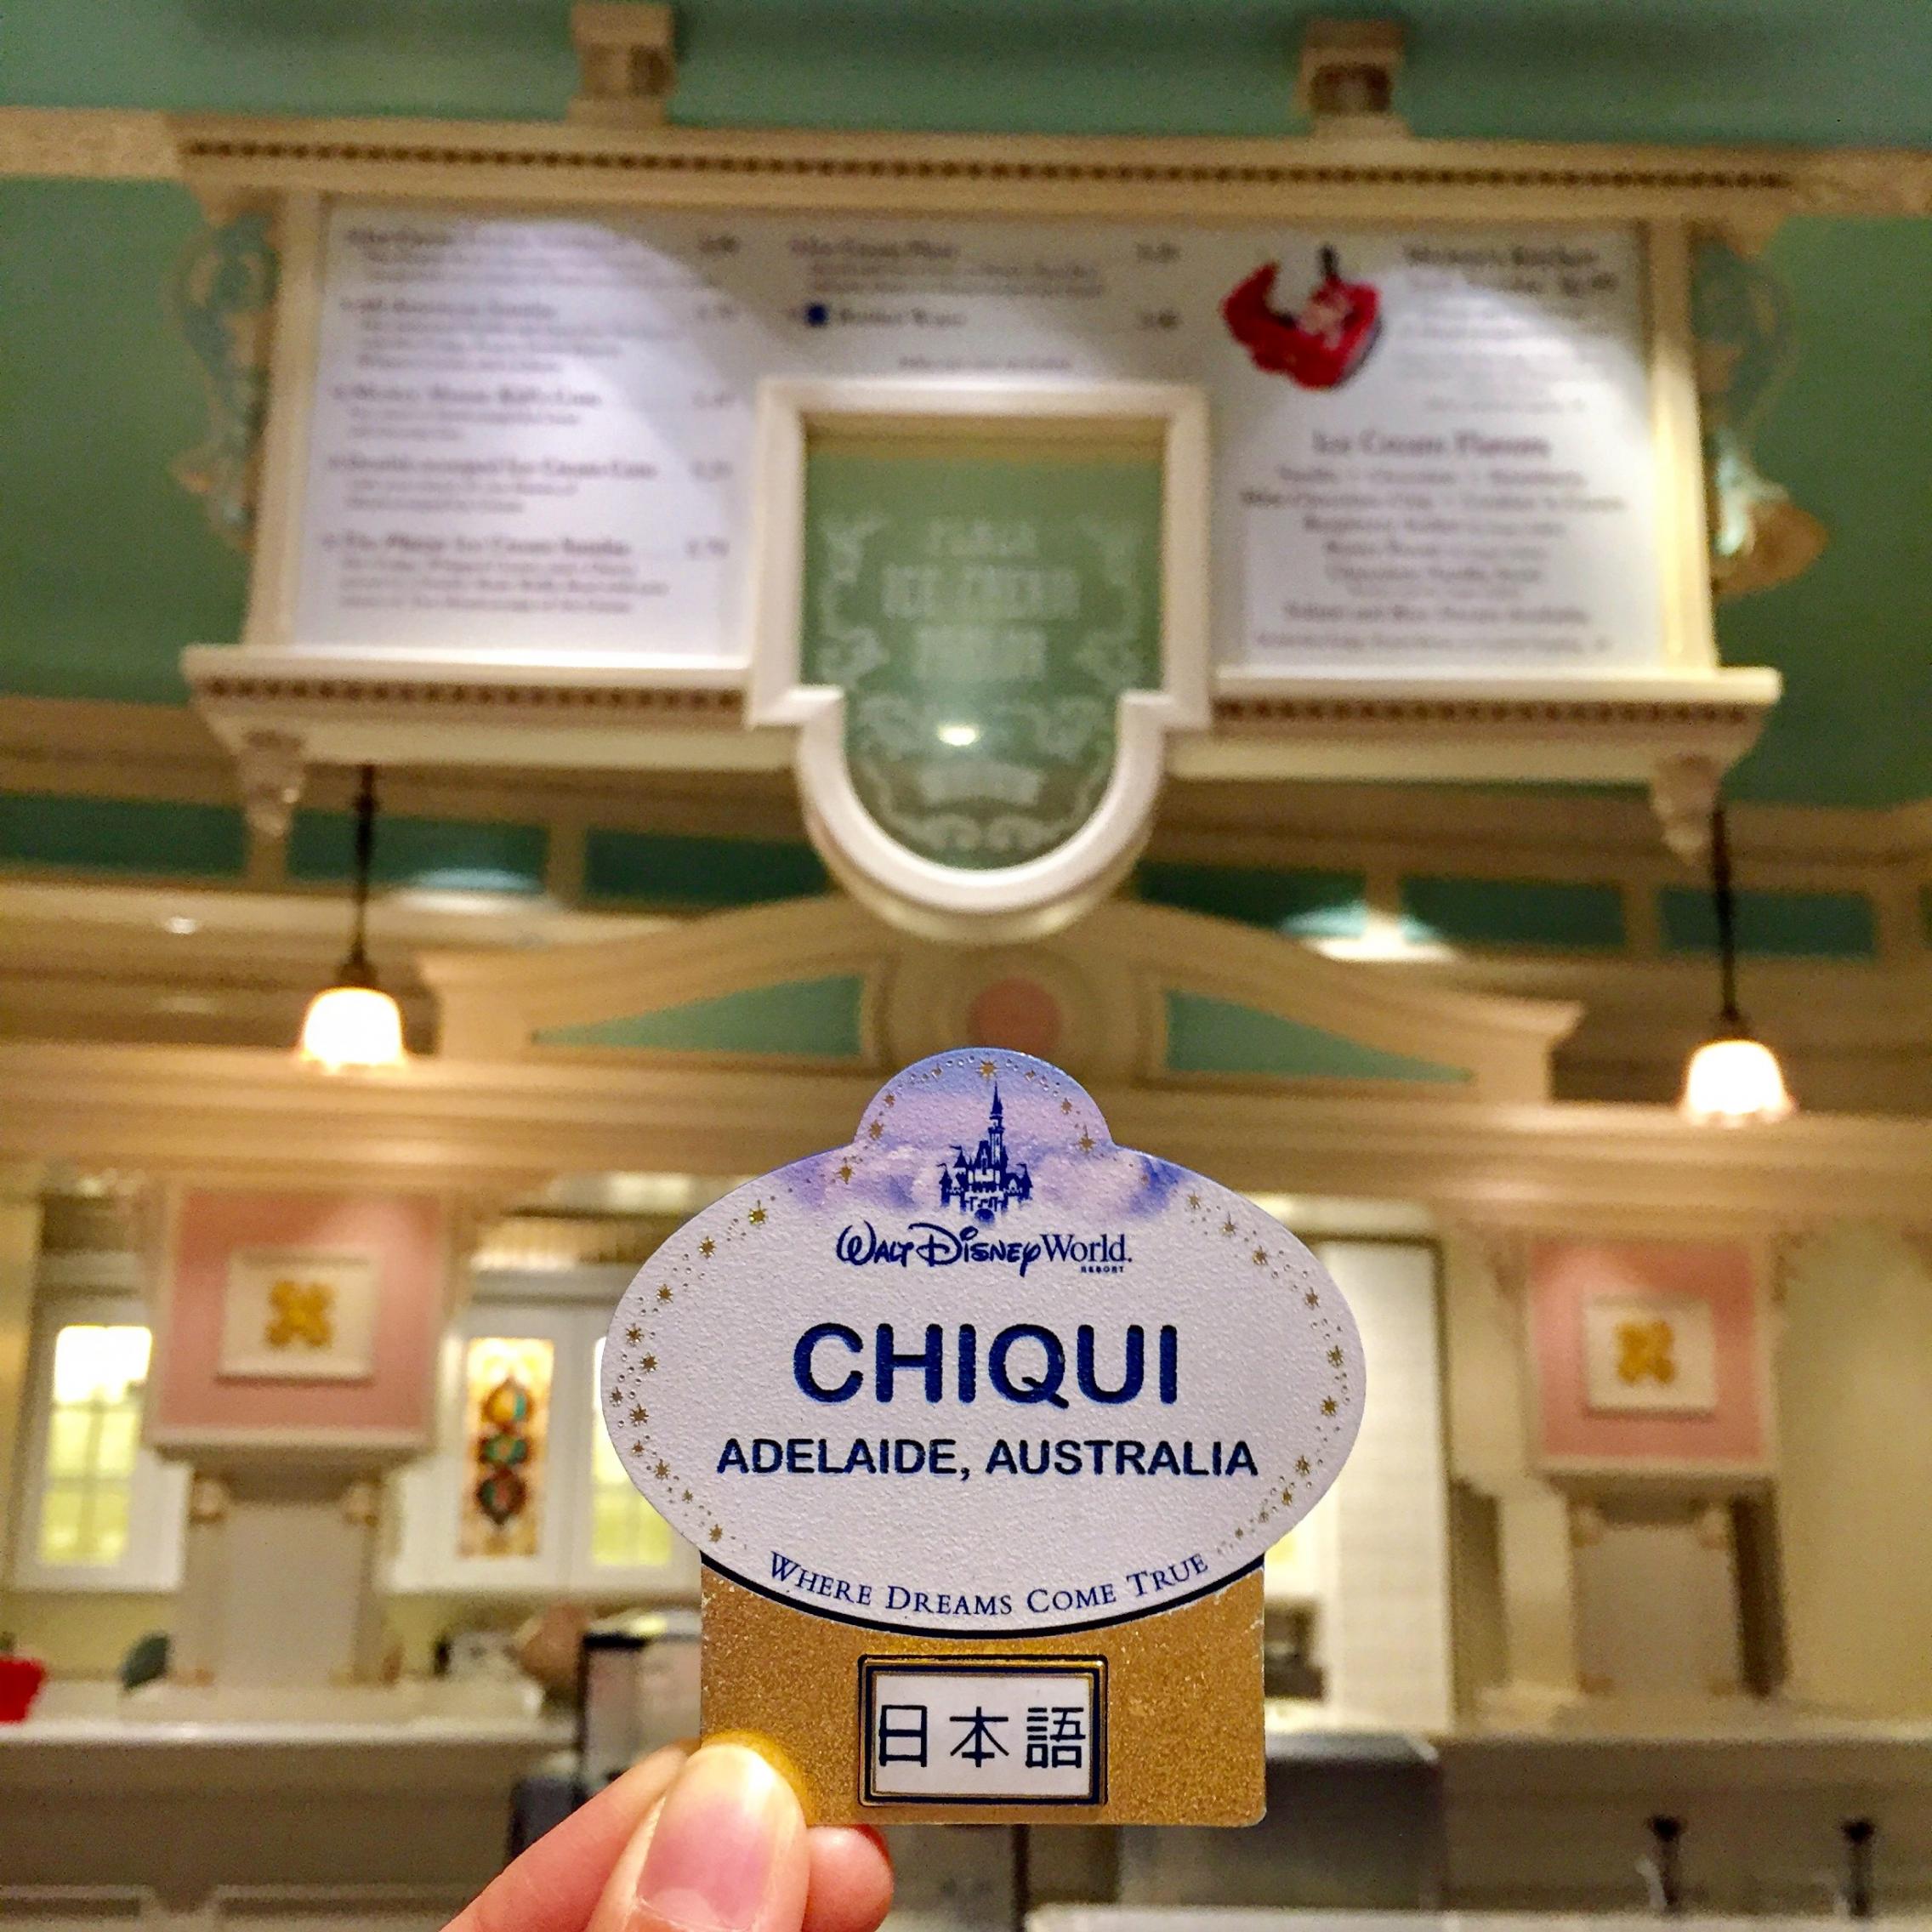 Chiqui's name tag at Walt Disney World